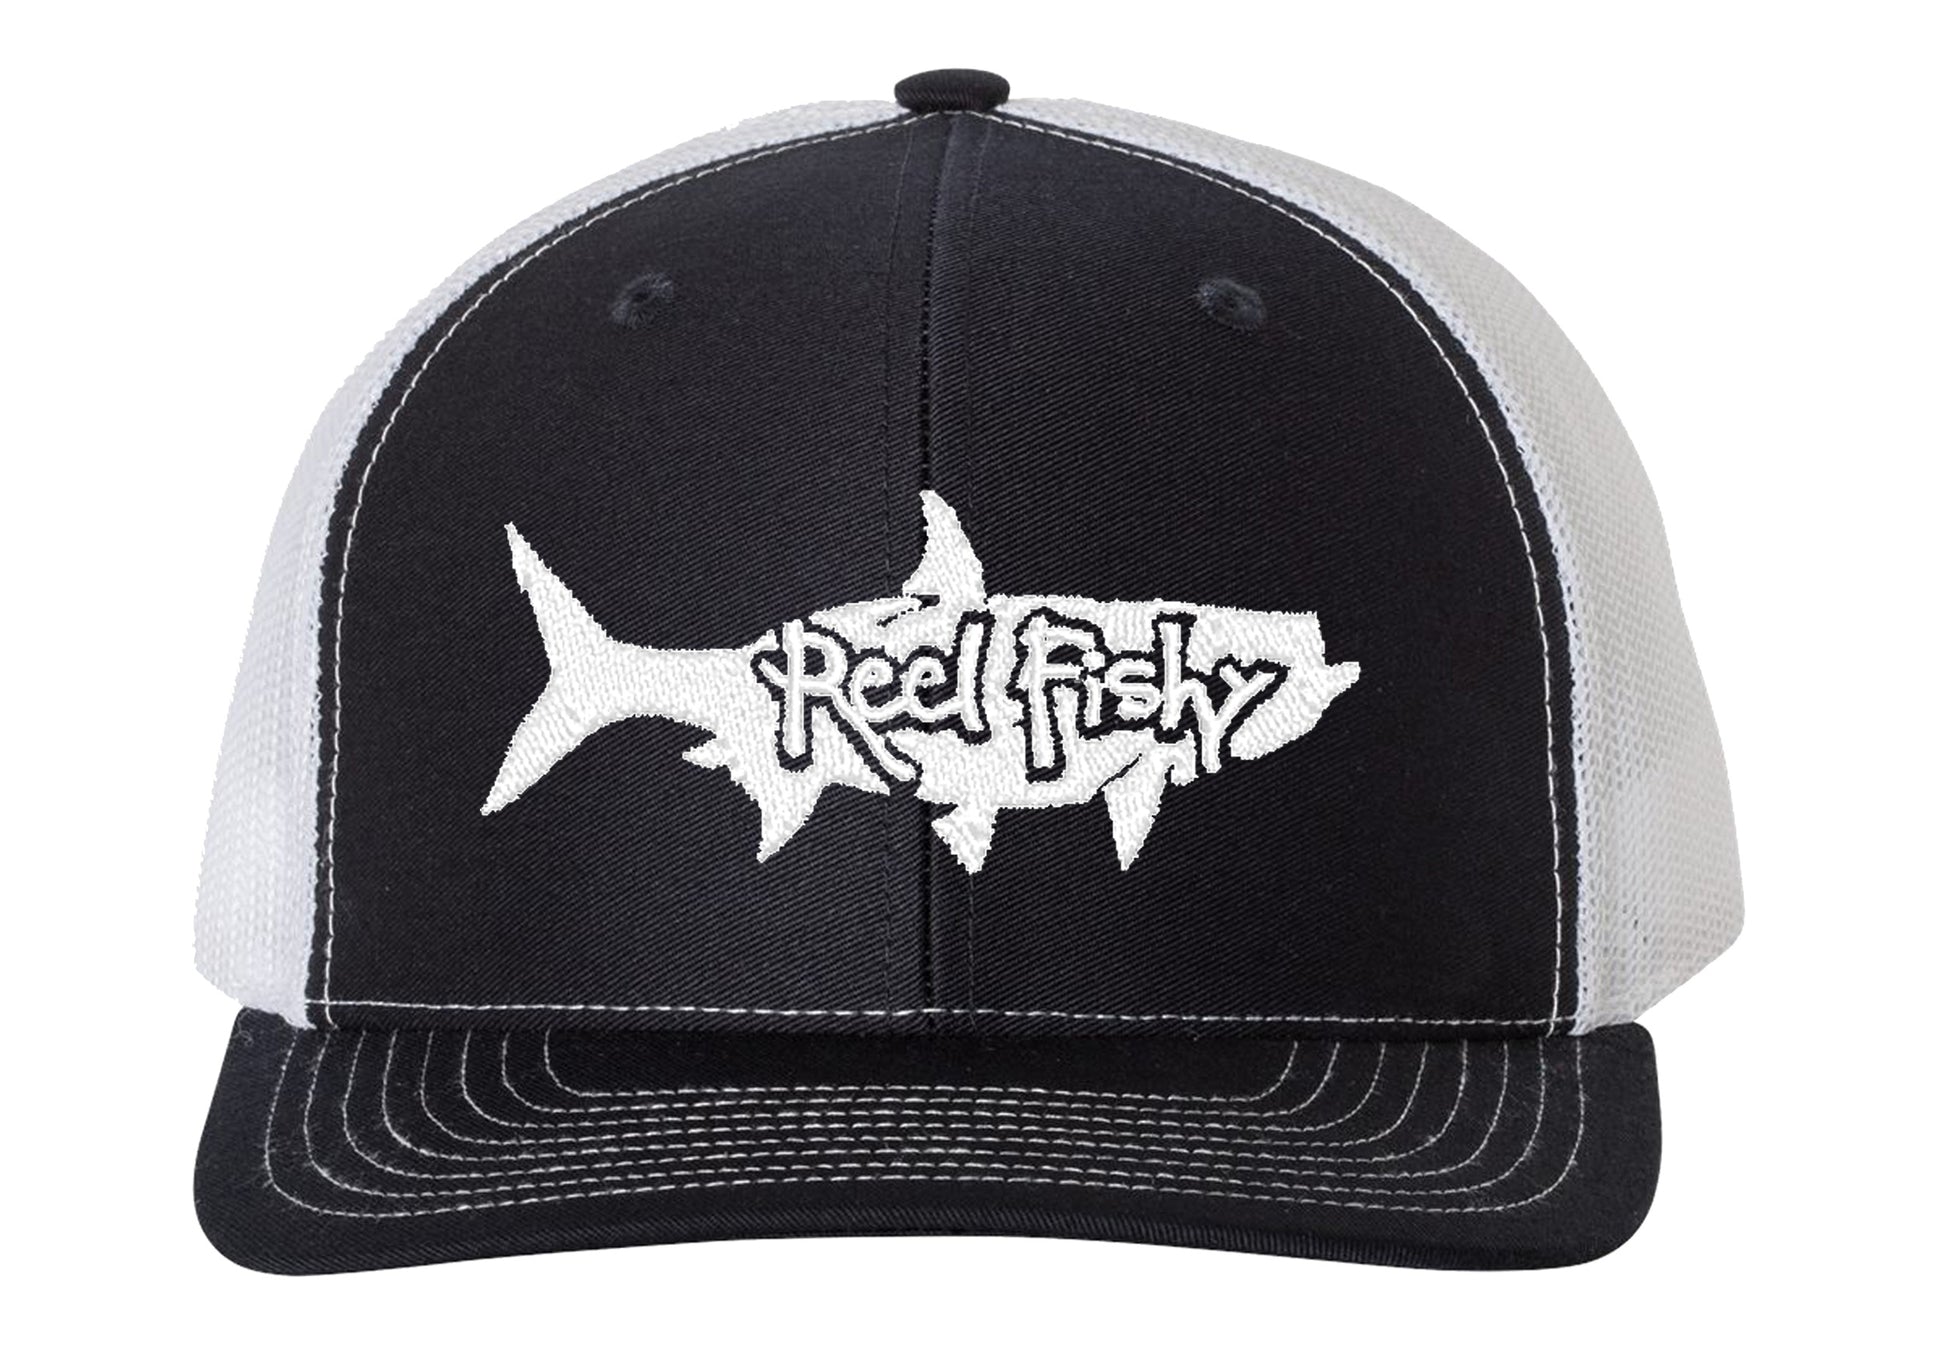 Tarpon Fishing Trucker Hats, Fishing Snapback Trucker Cap - Reel Fishy Black w/White Tarpon Logo